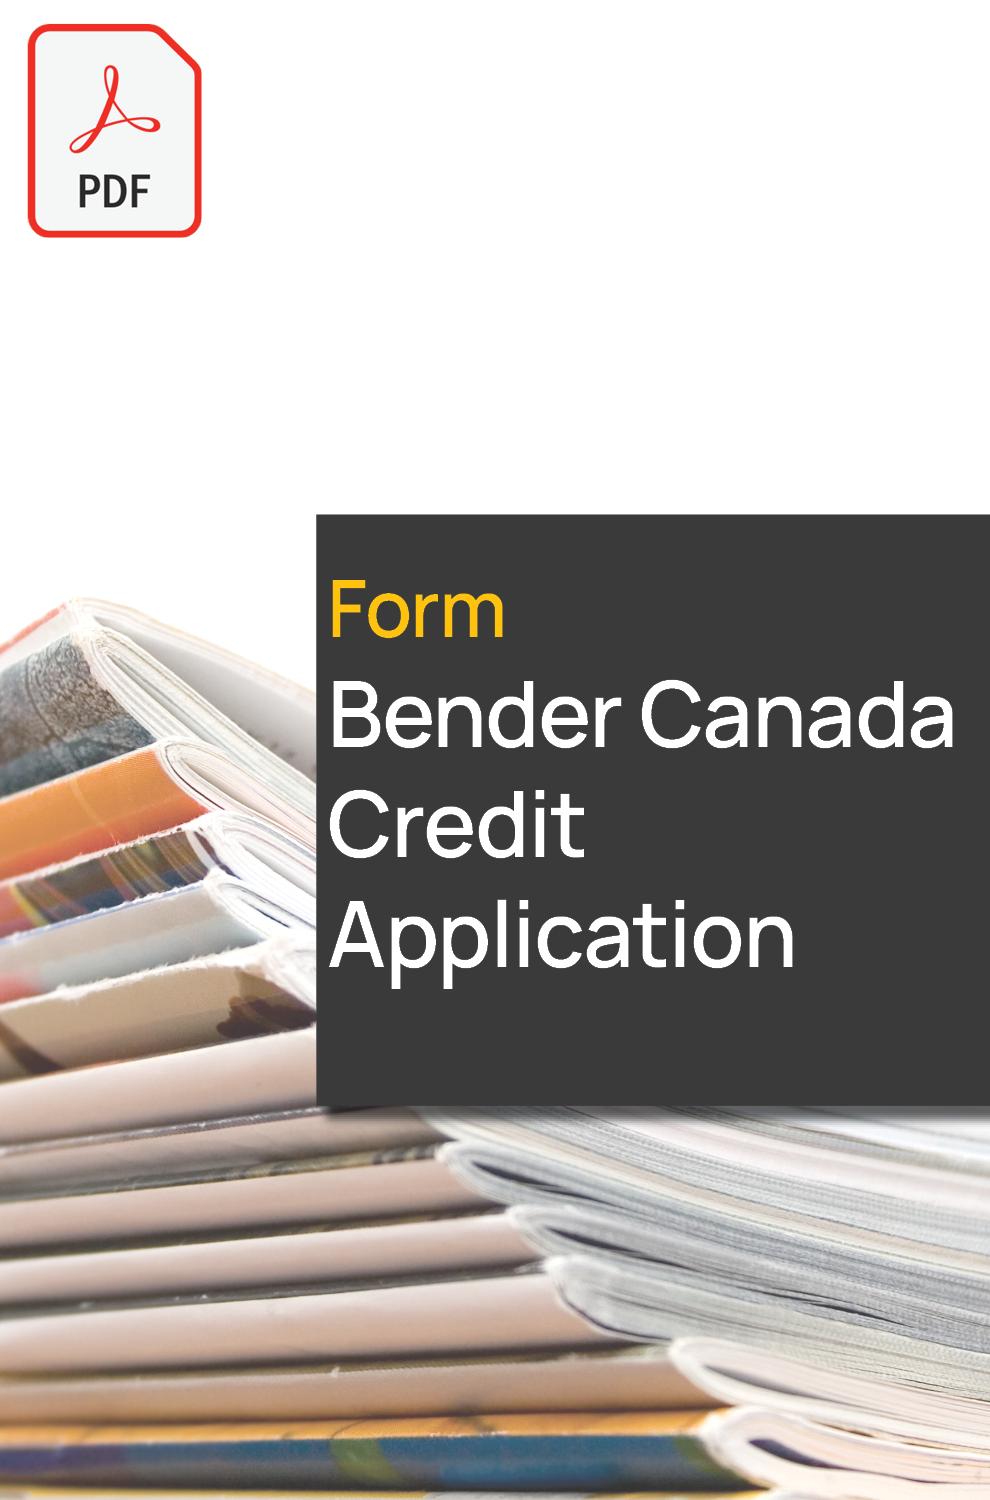 Bender Canada Credit Form